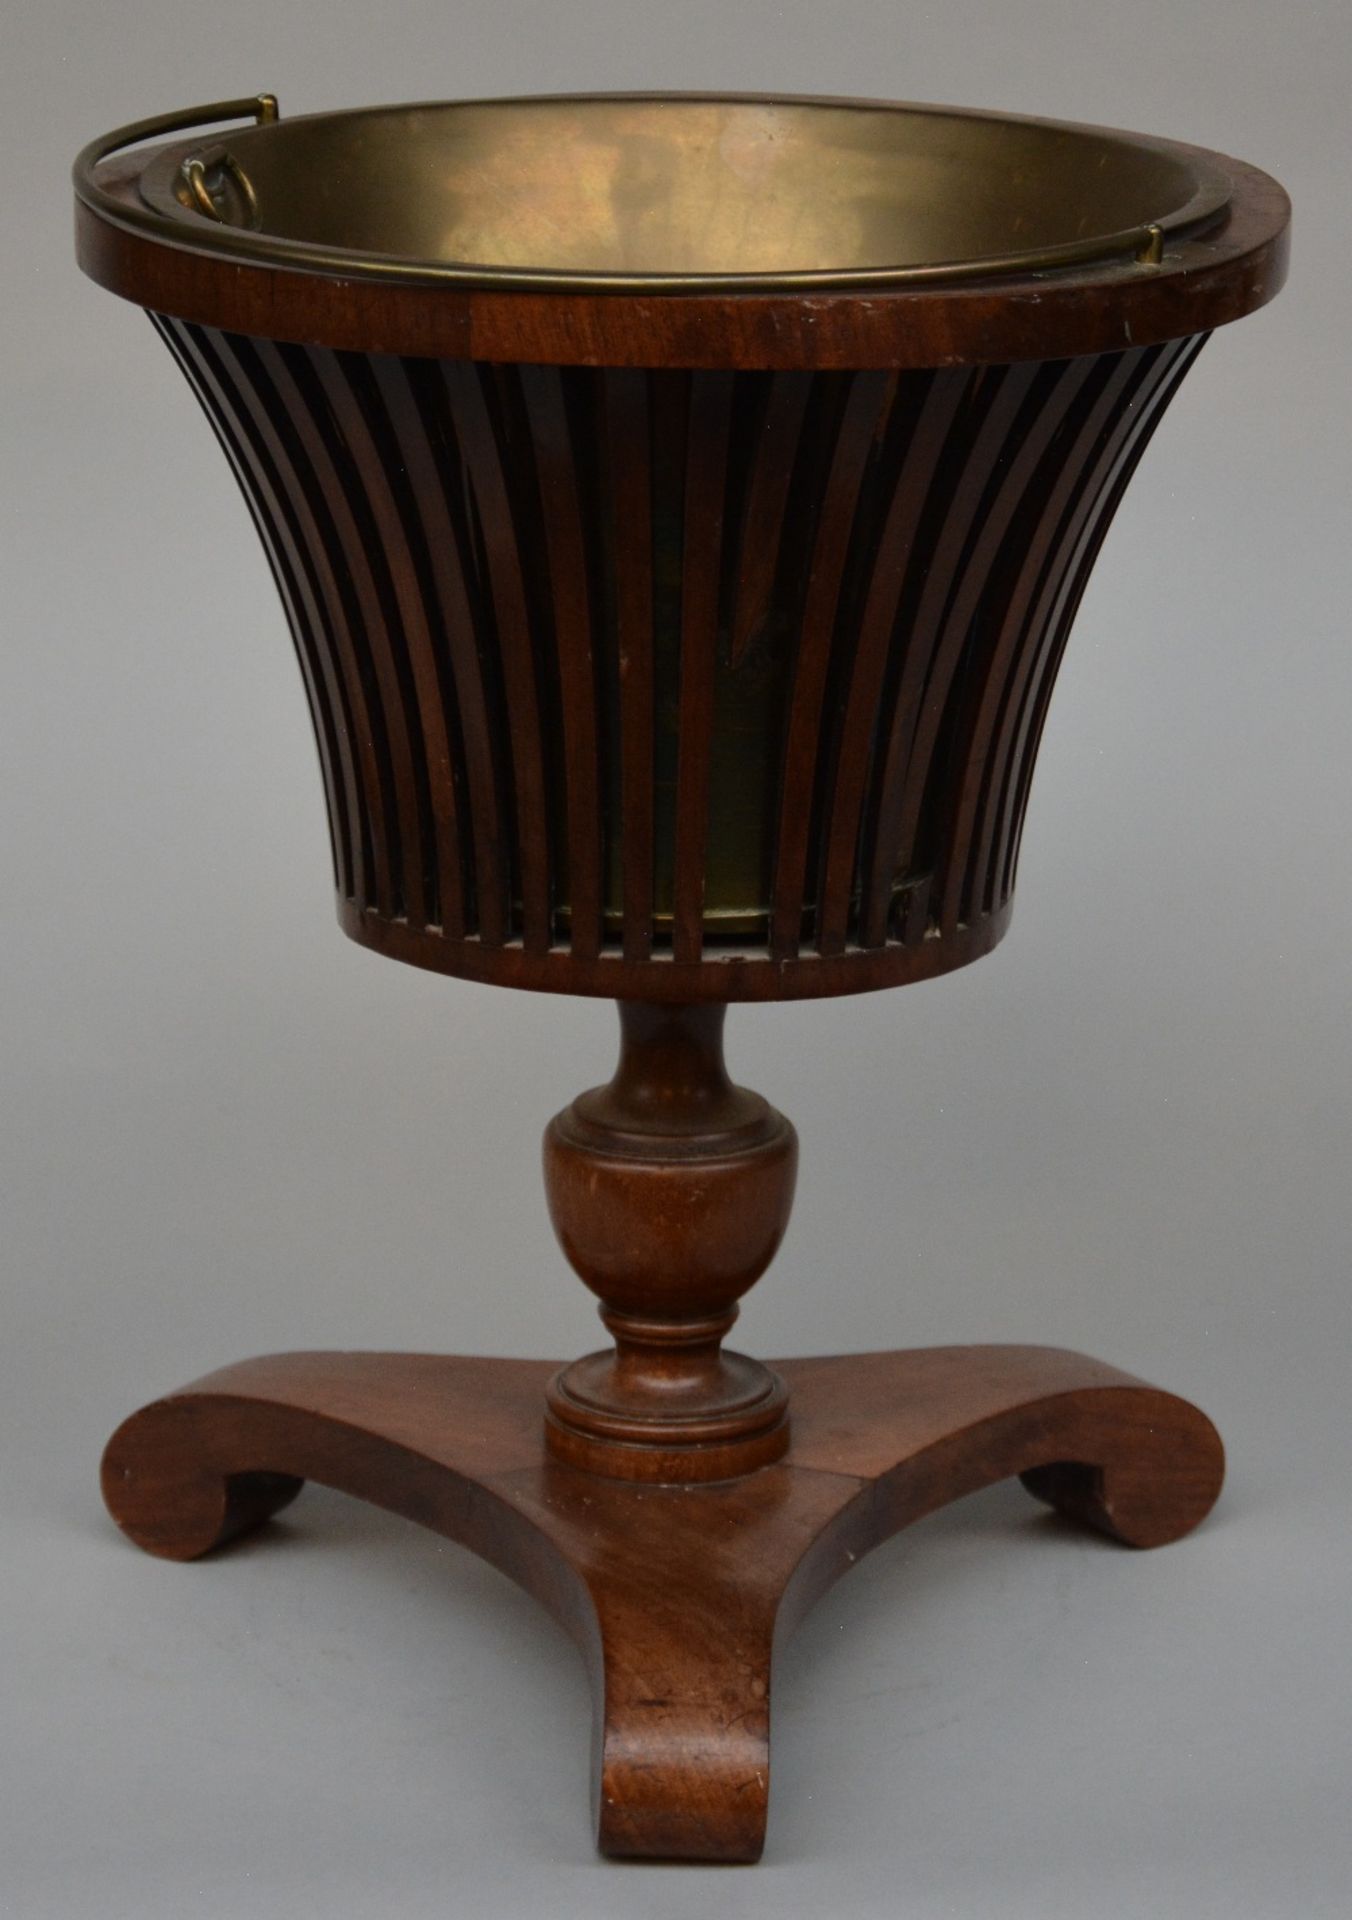 Mahogany and brass tea stove, 19thC, H 48 - Diameter 37,5 cm (minor damage) - Image 3 of 6